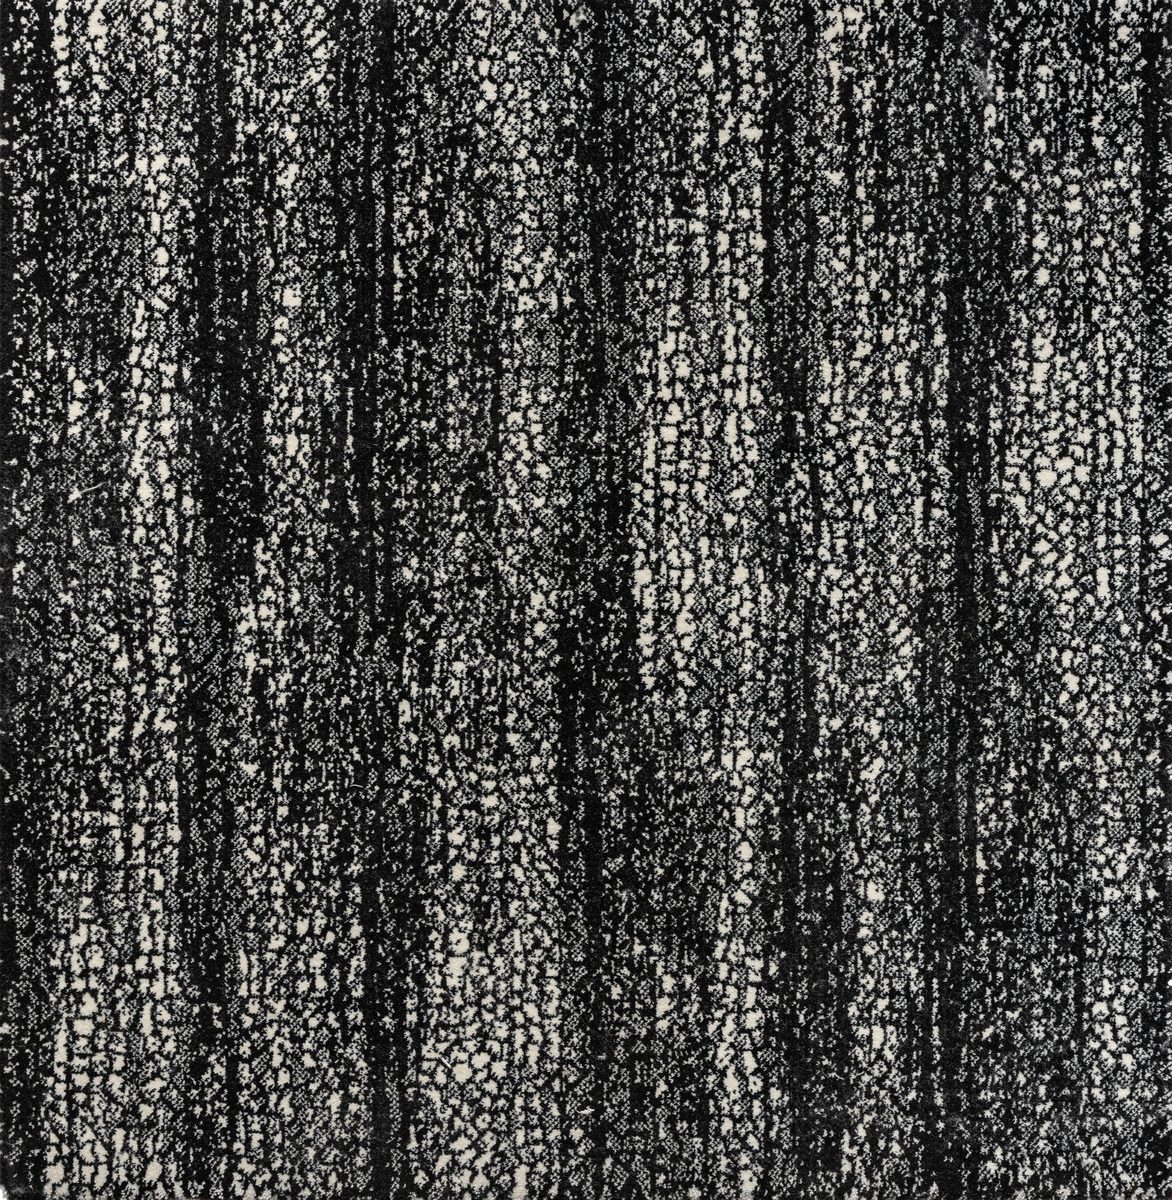 GRAIN-Onyx-1172×1201-a9bfc6c